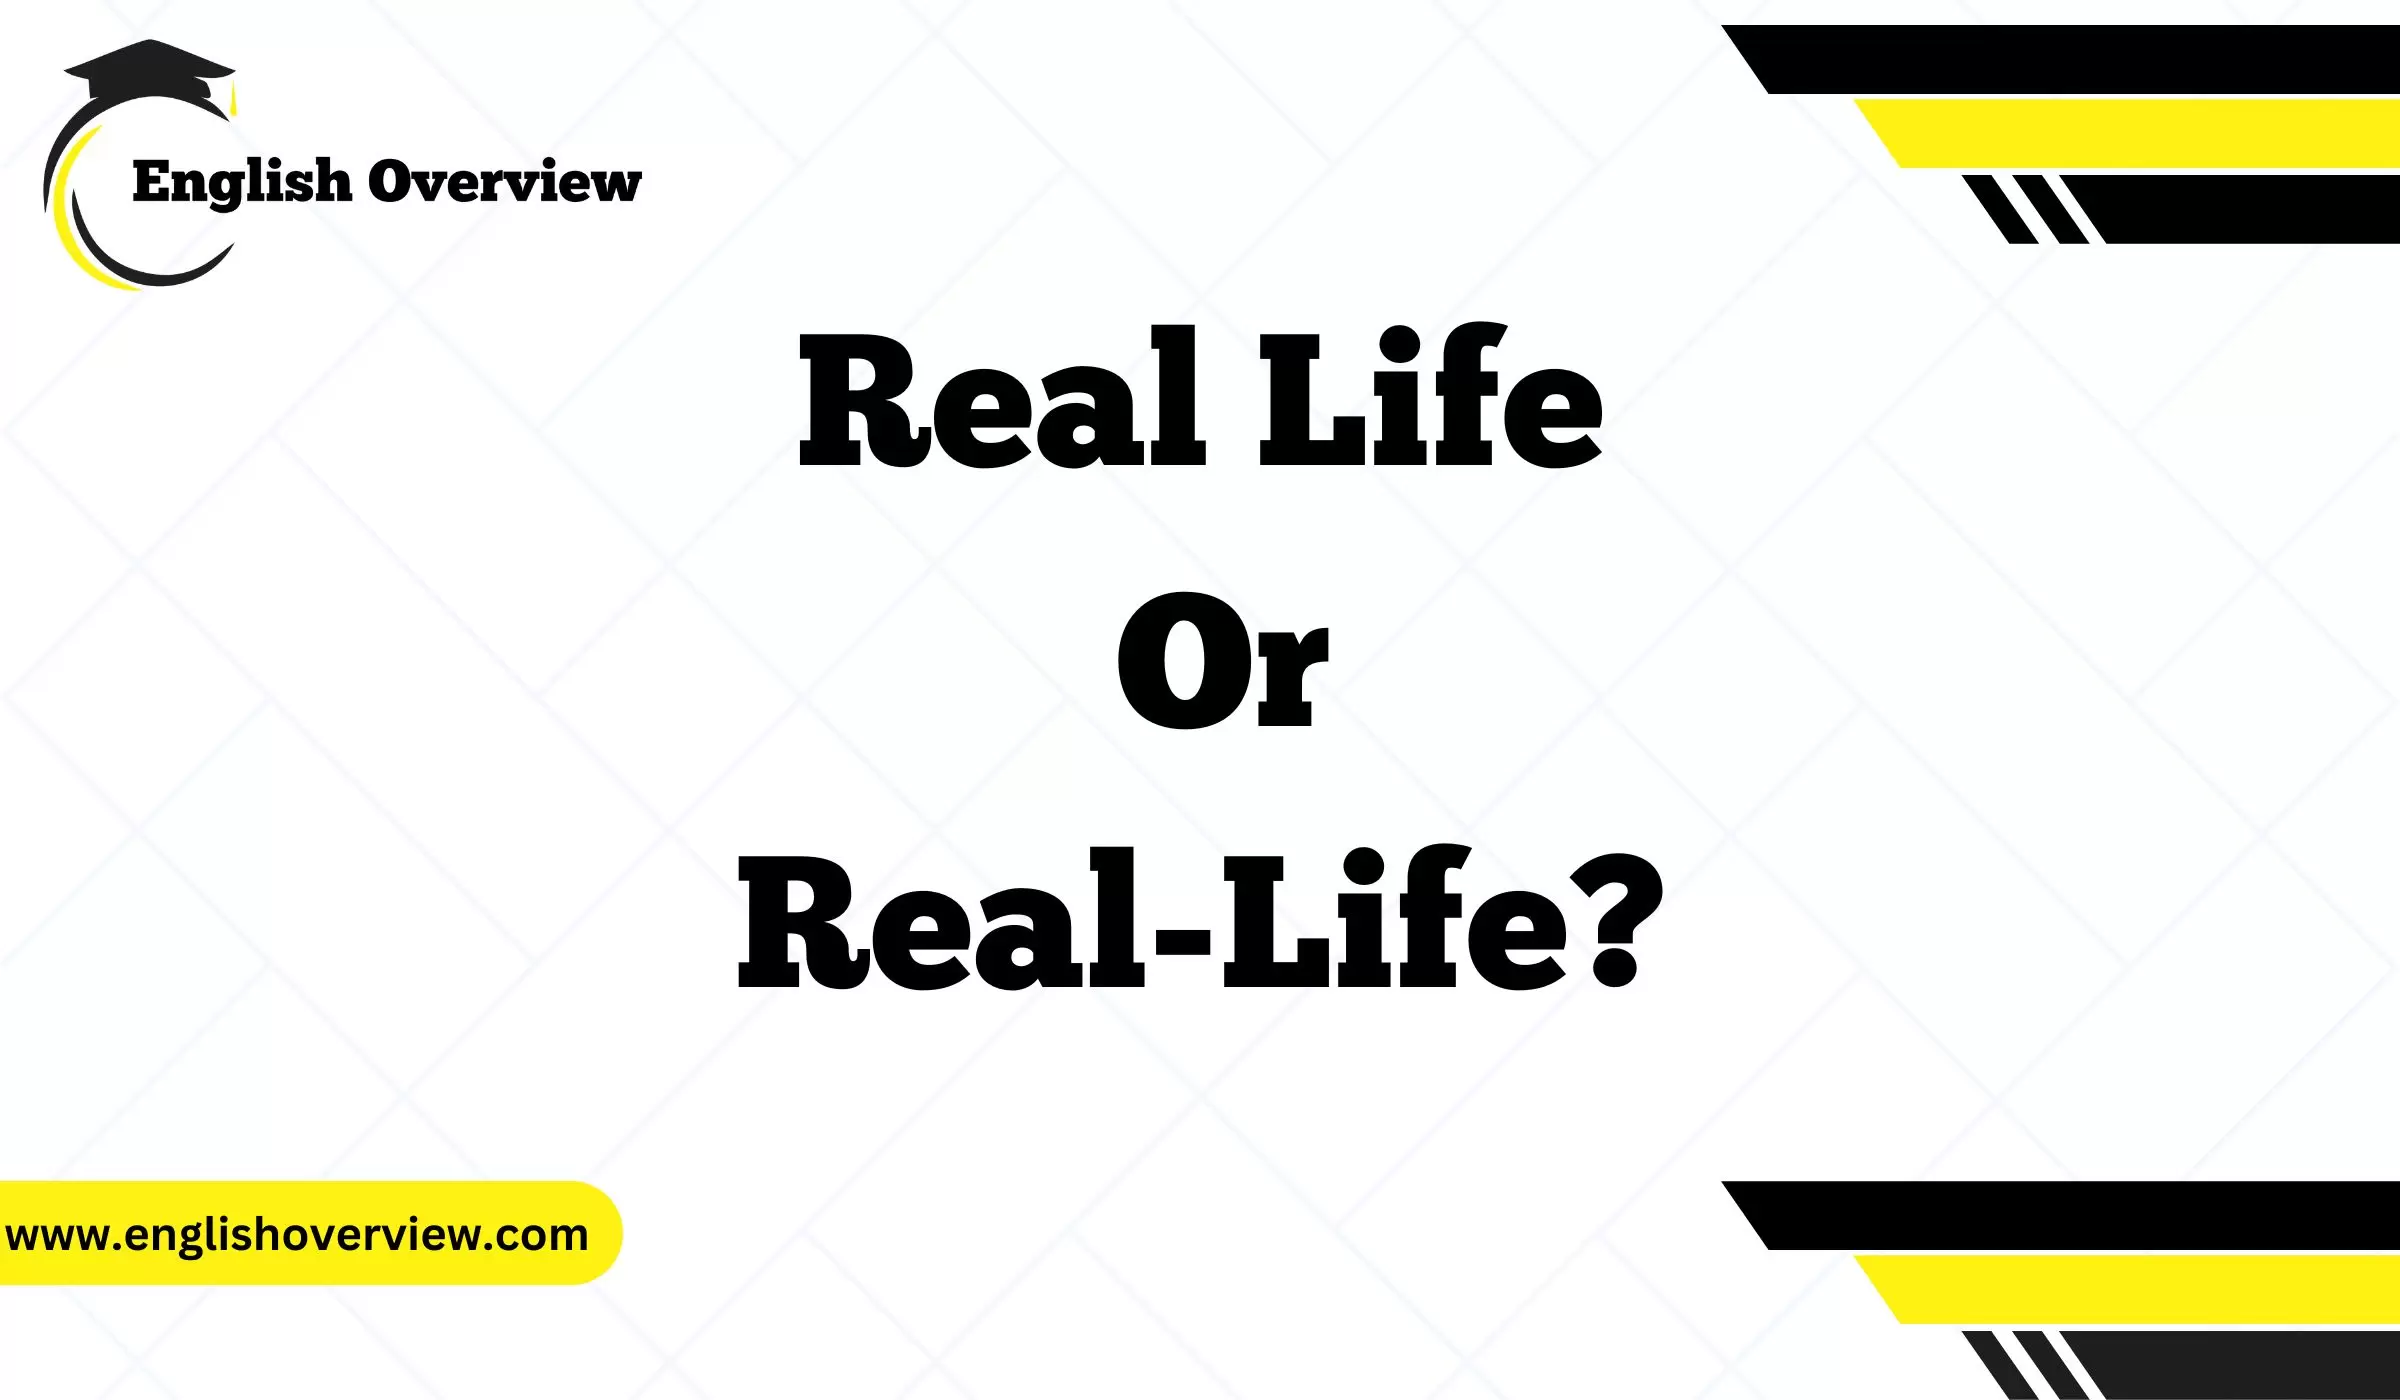 Real Life or Real-Life?